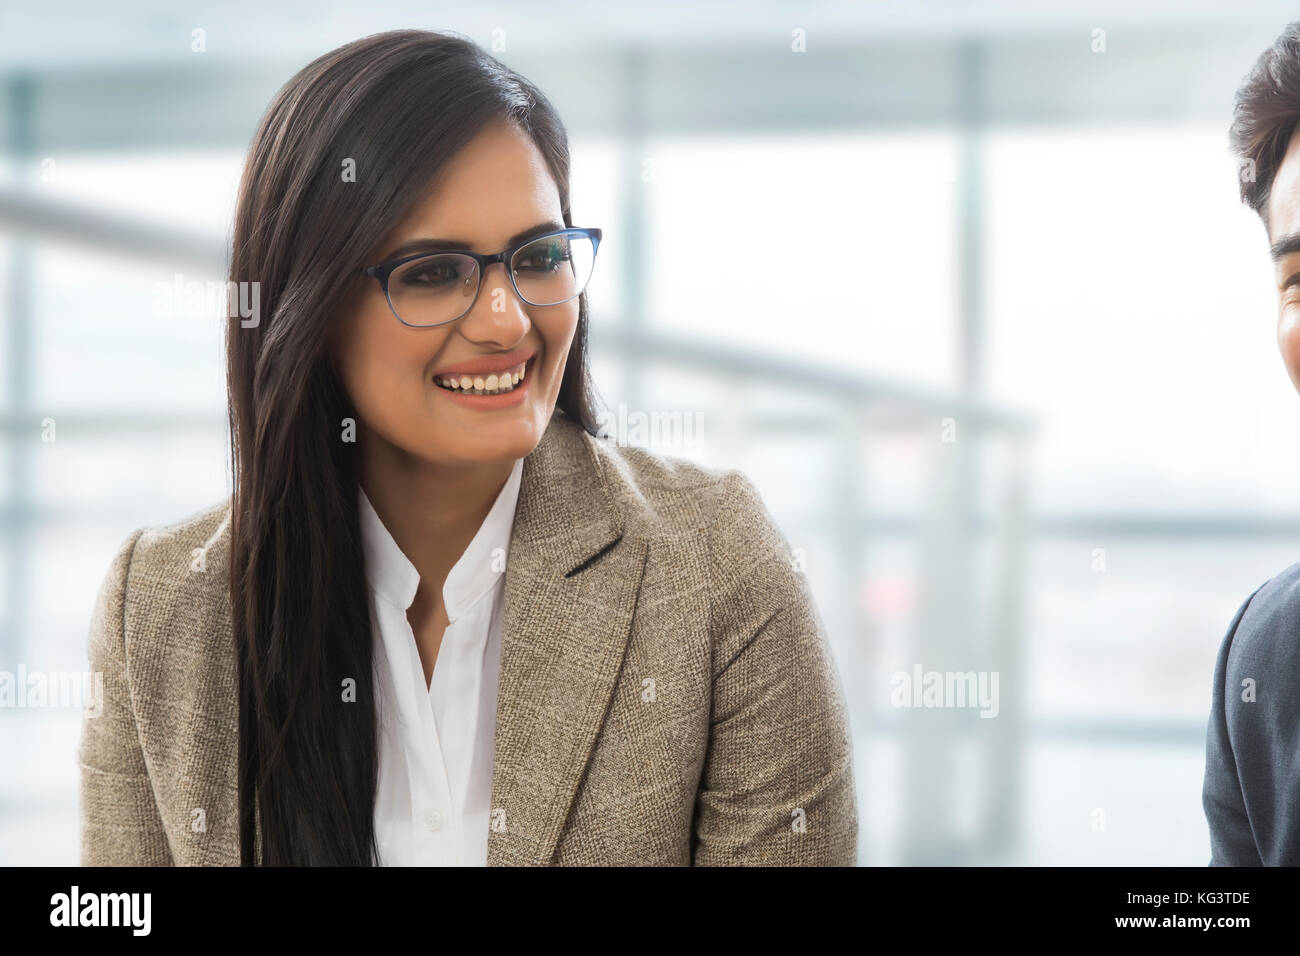 Portrait of businesswoman smiling Stock Photo